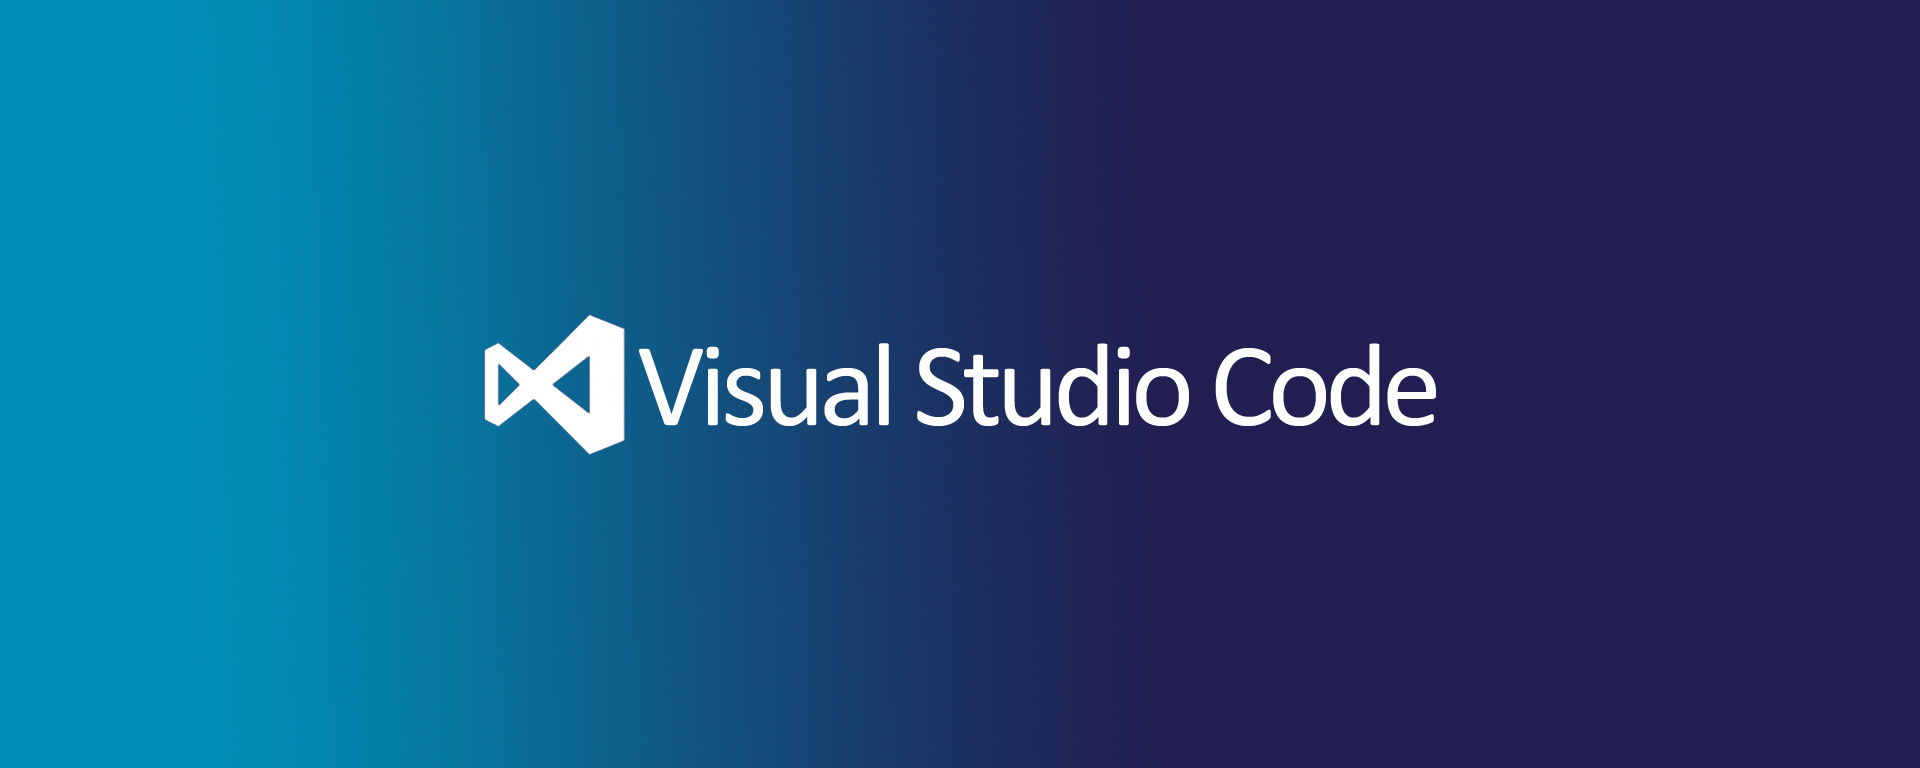 latest version of visual studio code